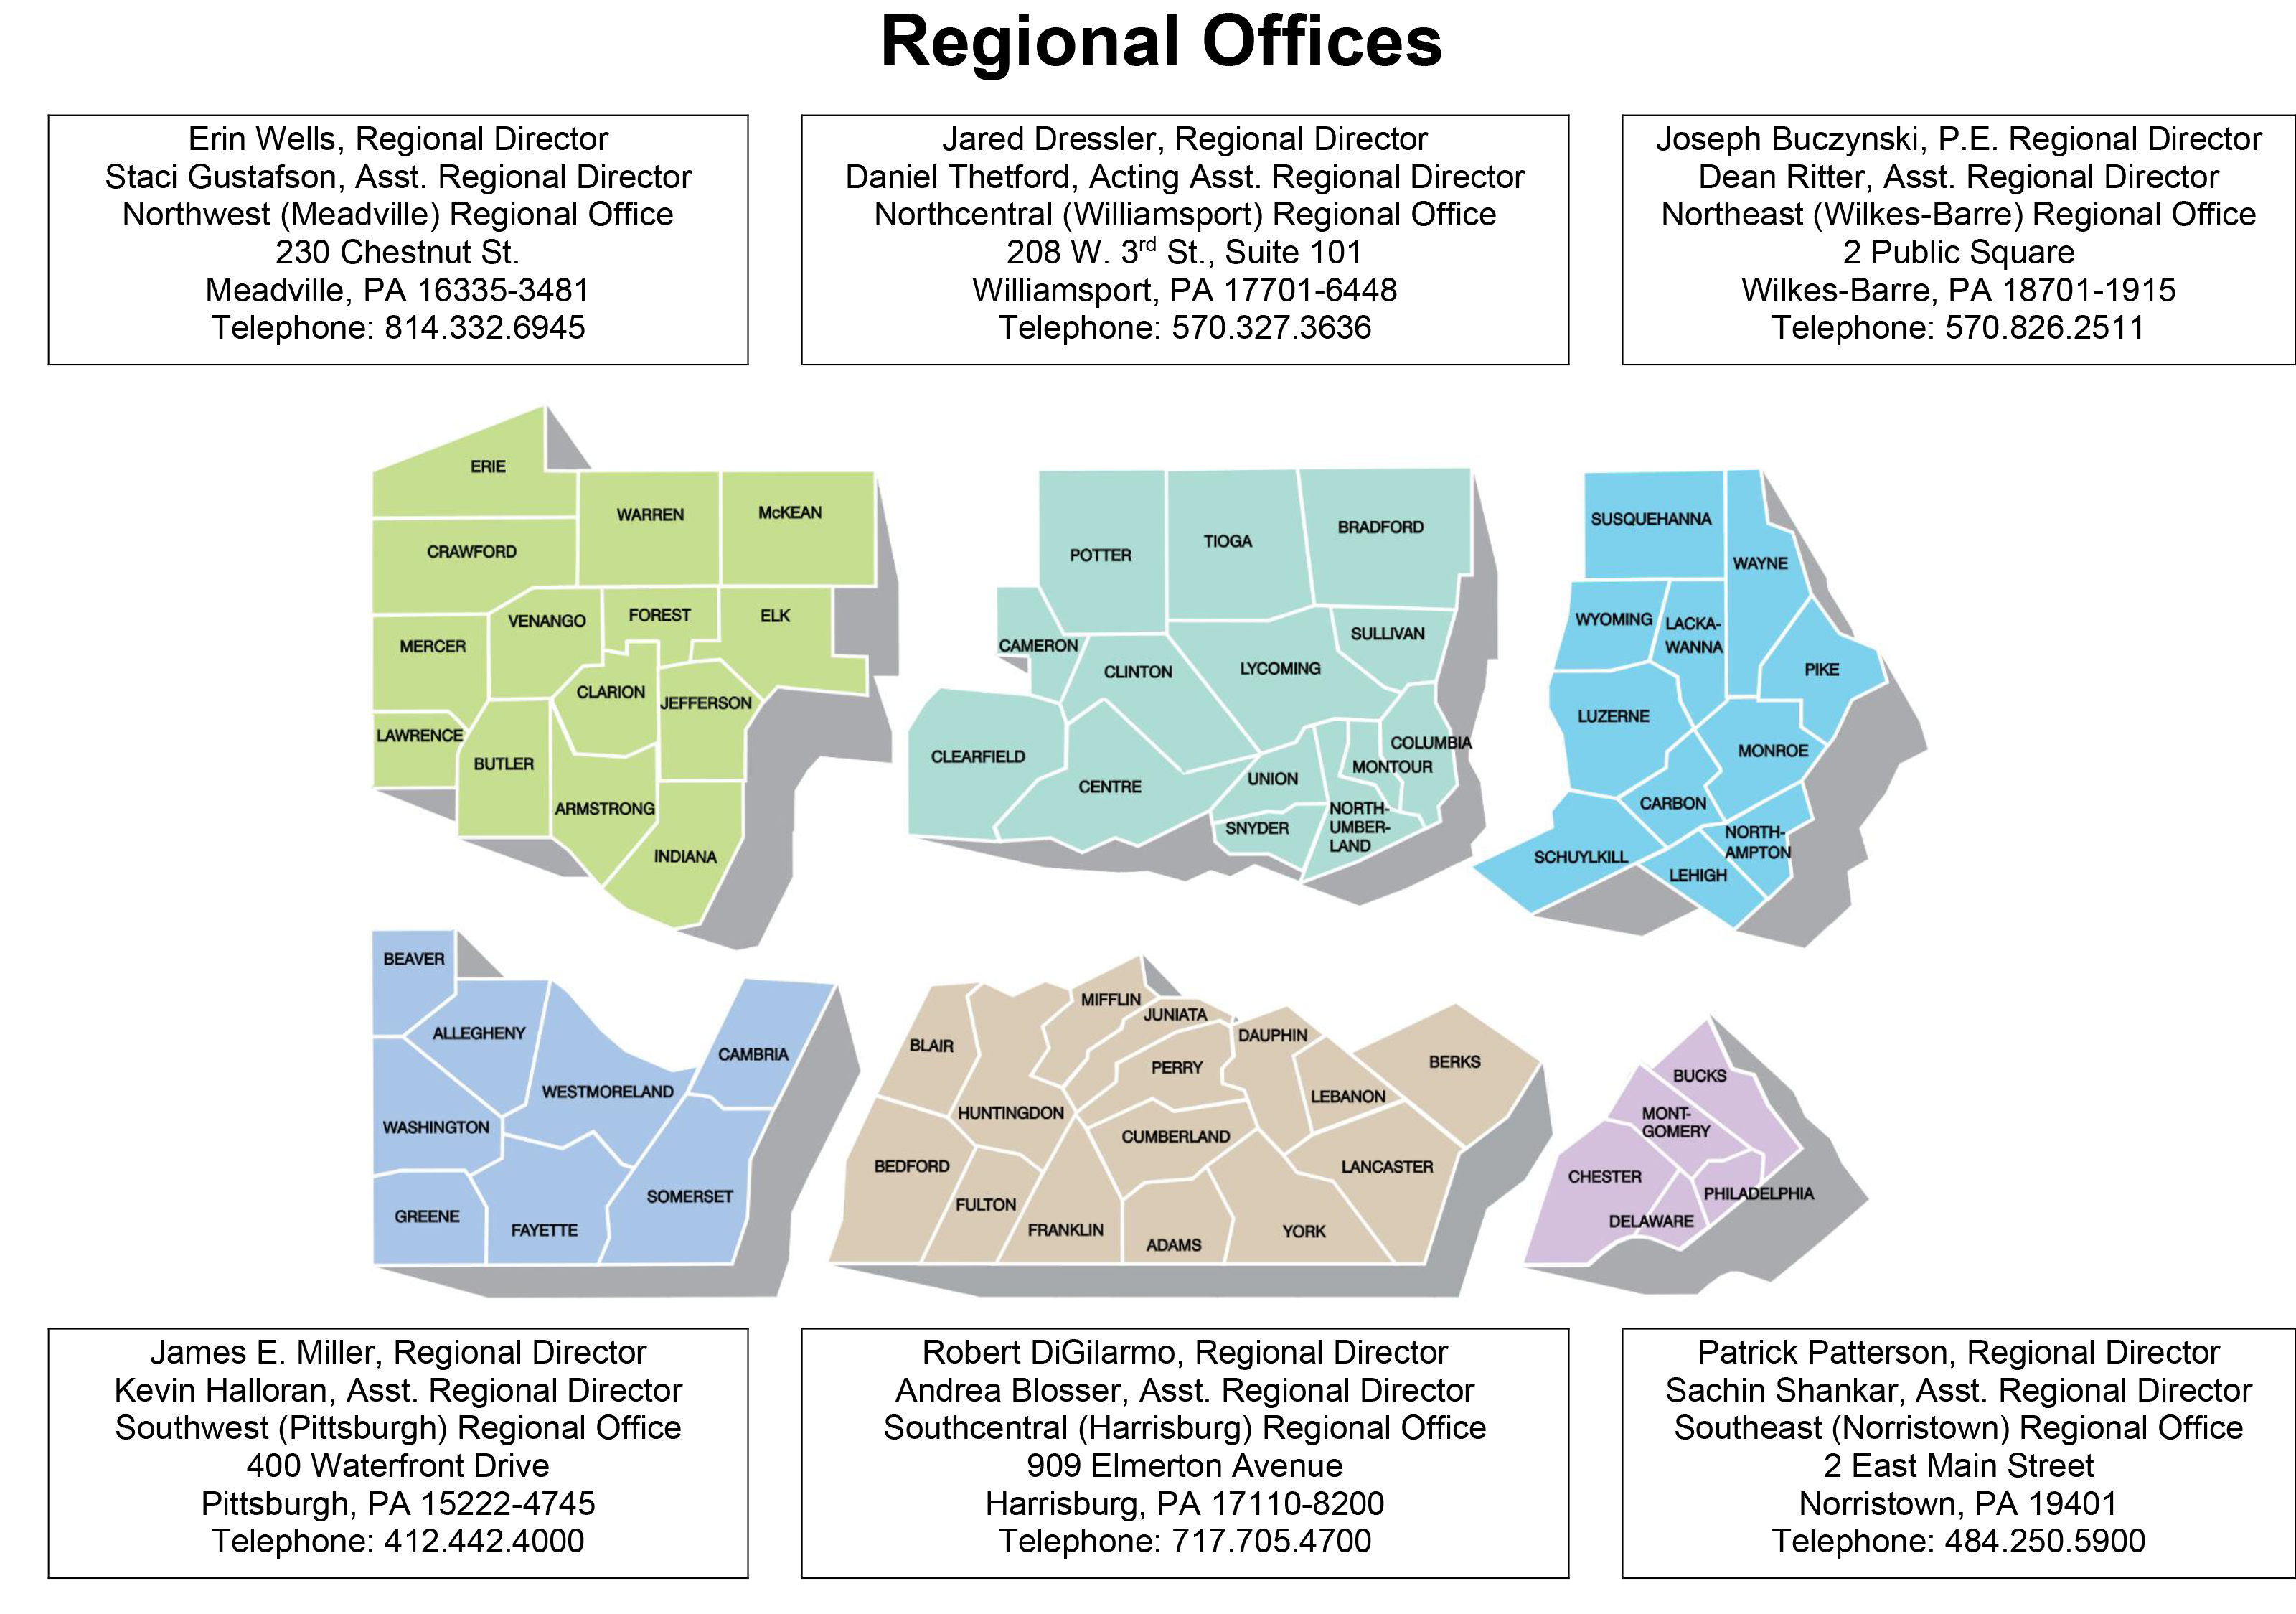 DEP Regional Offices Map